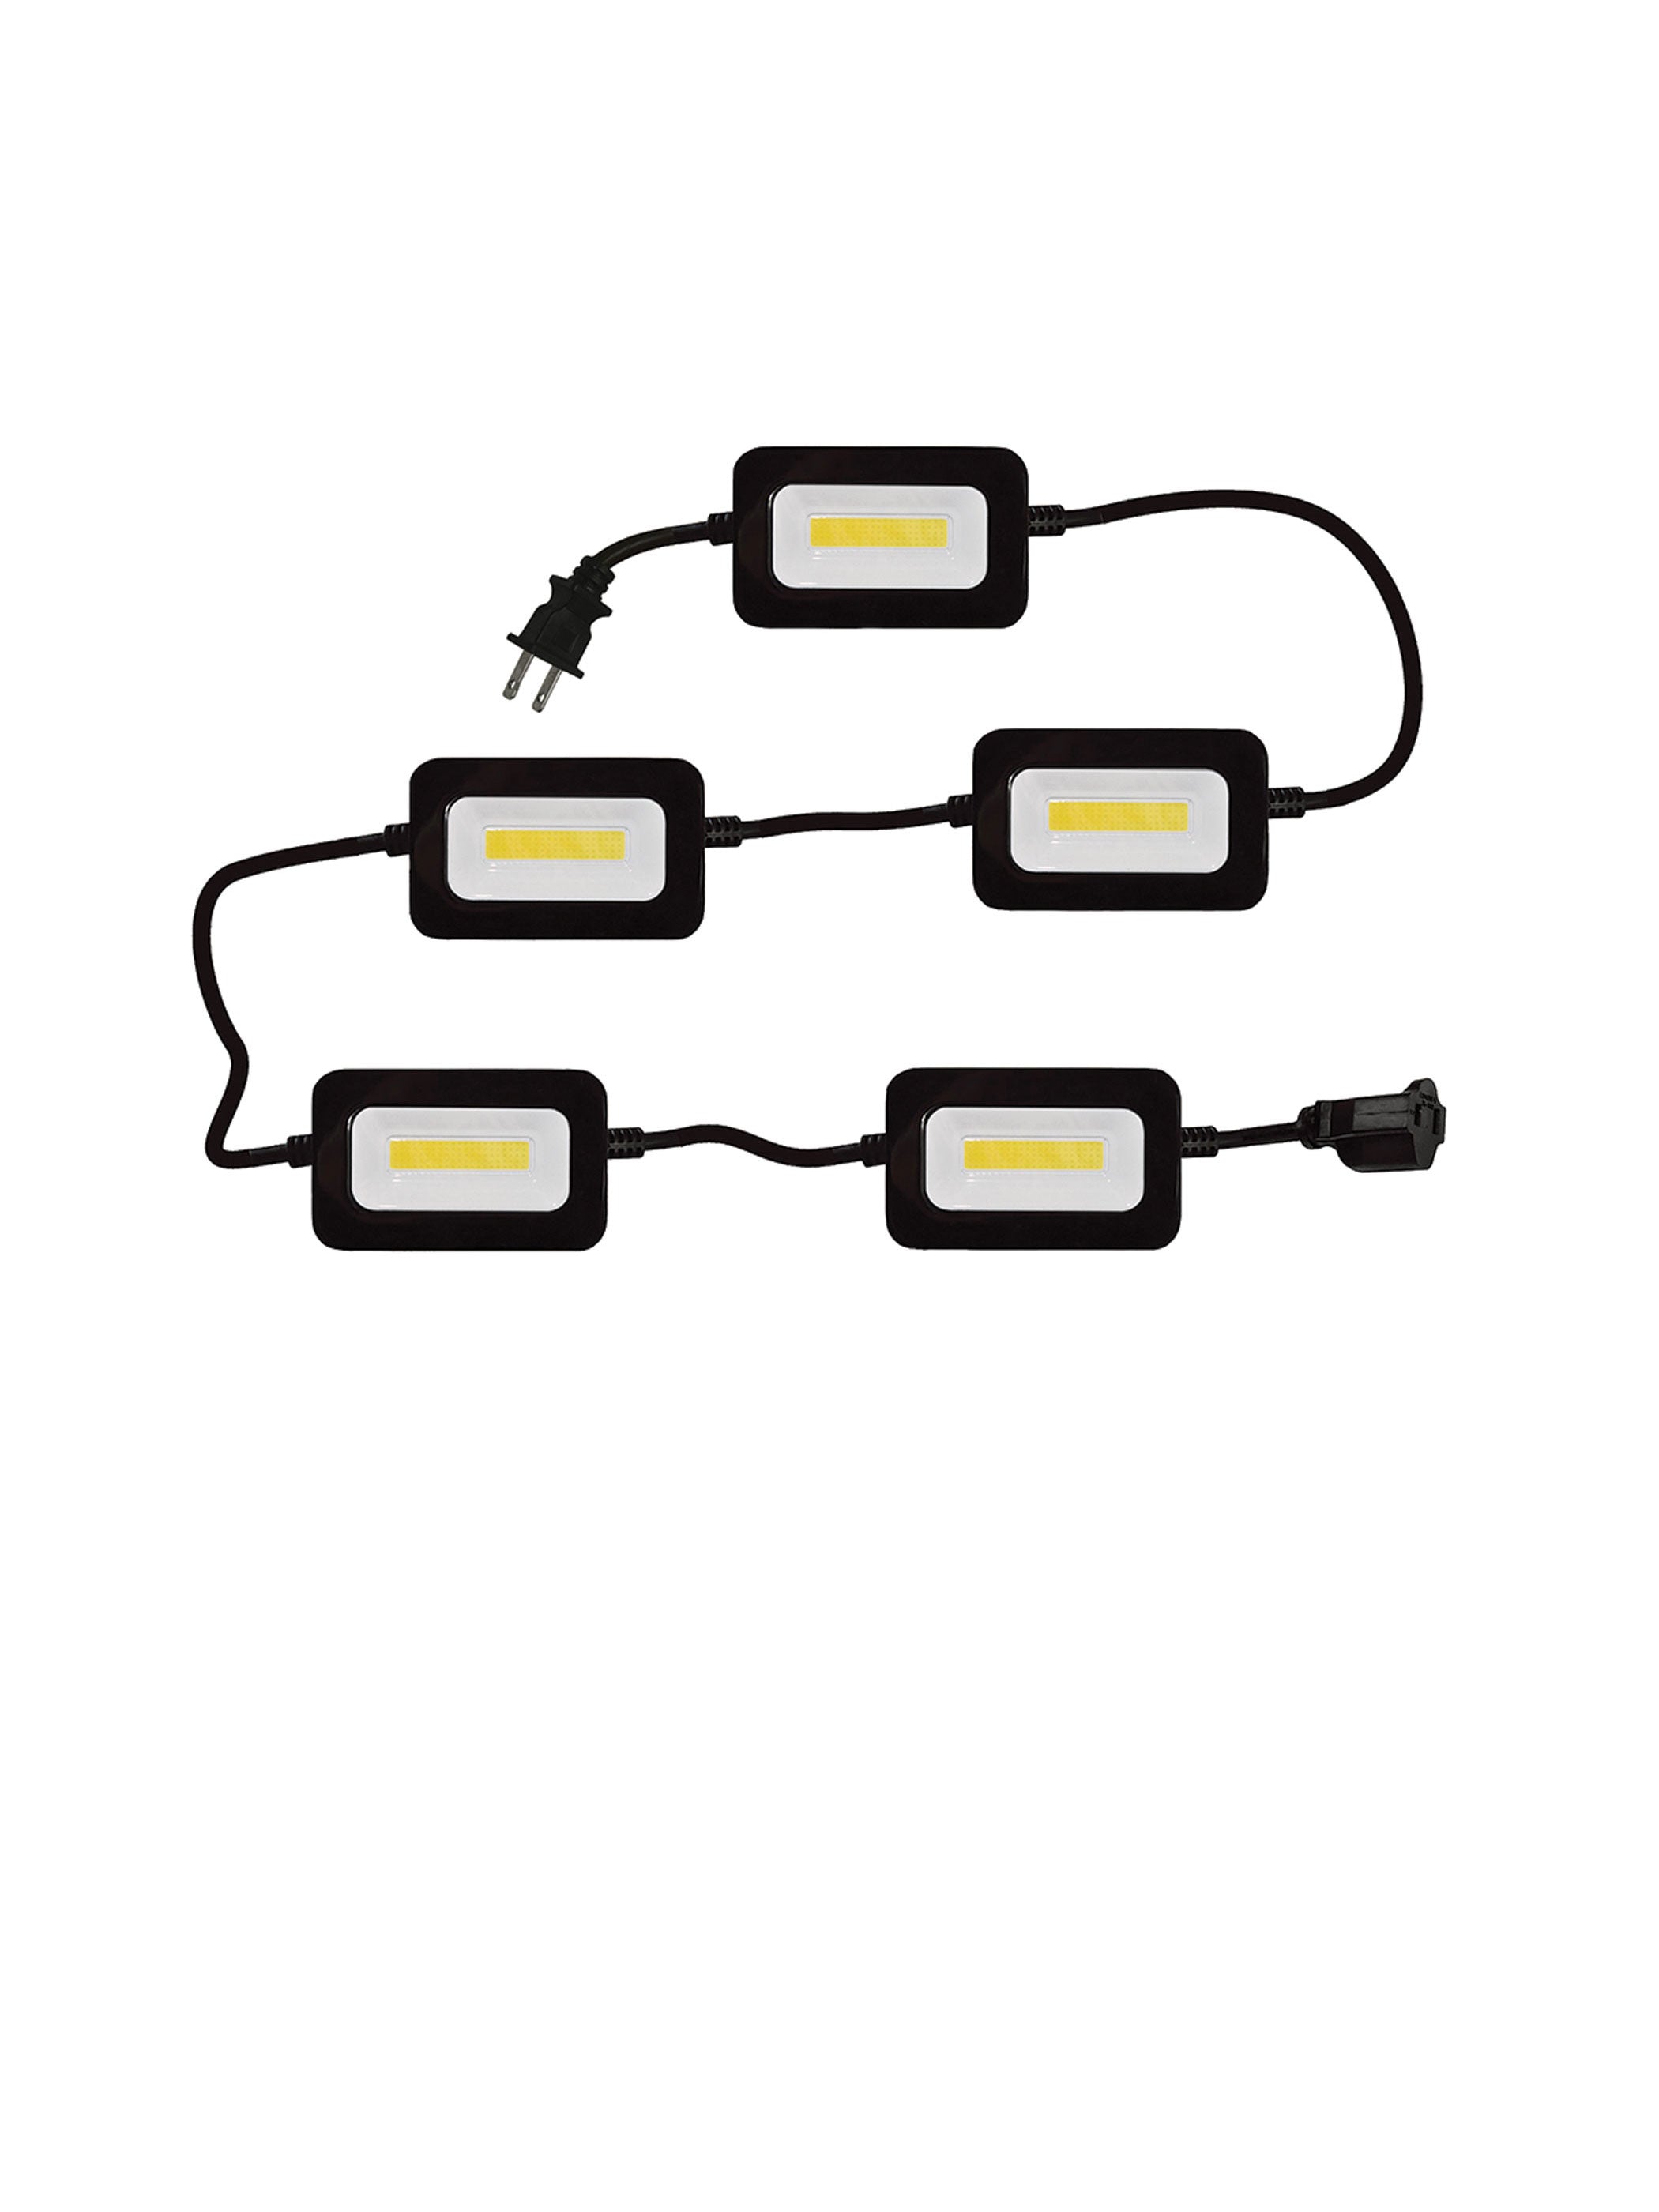 GT-Lite® GT-506-U - LED Portable Work Light 